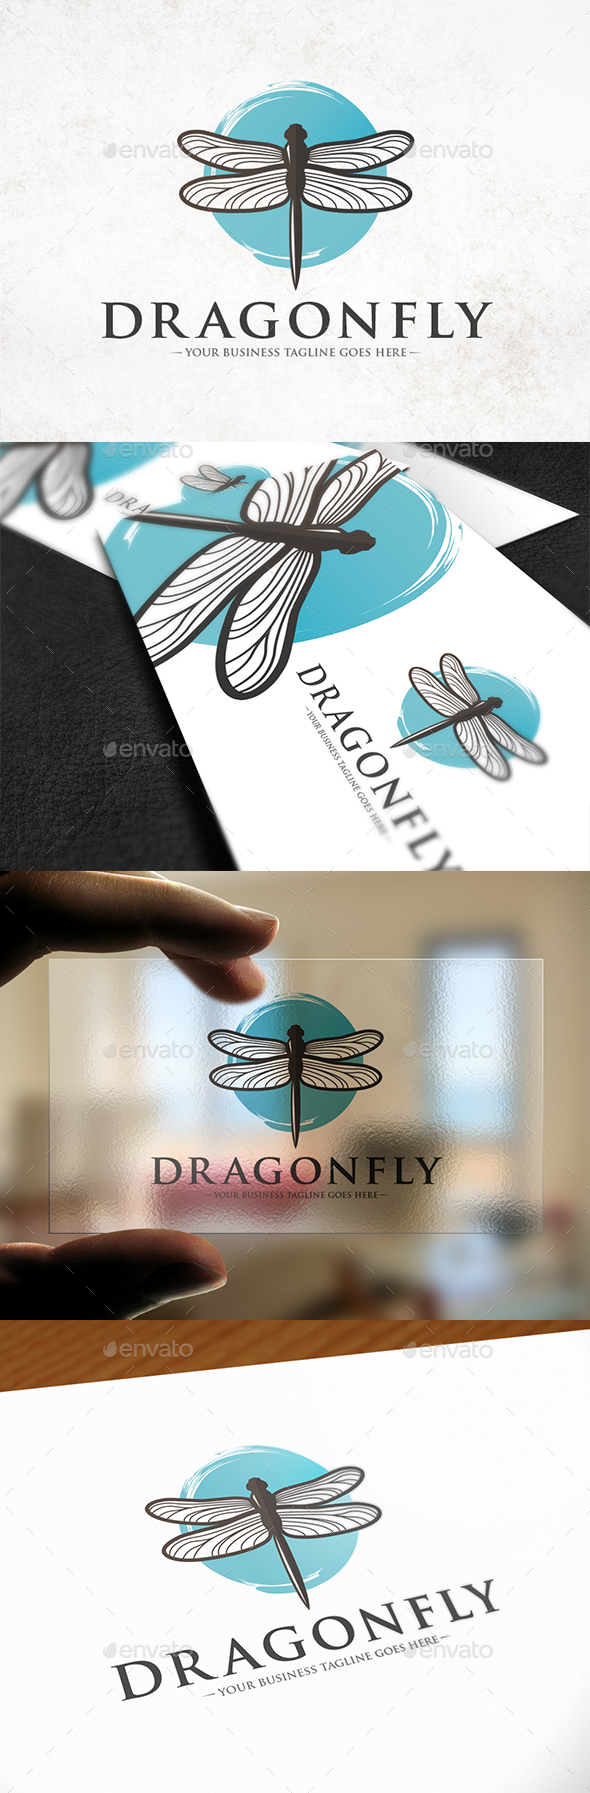 Sky Dragonfly Logo Template